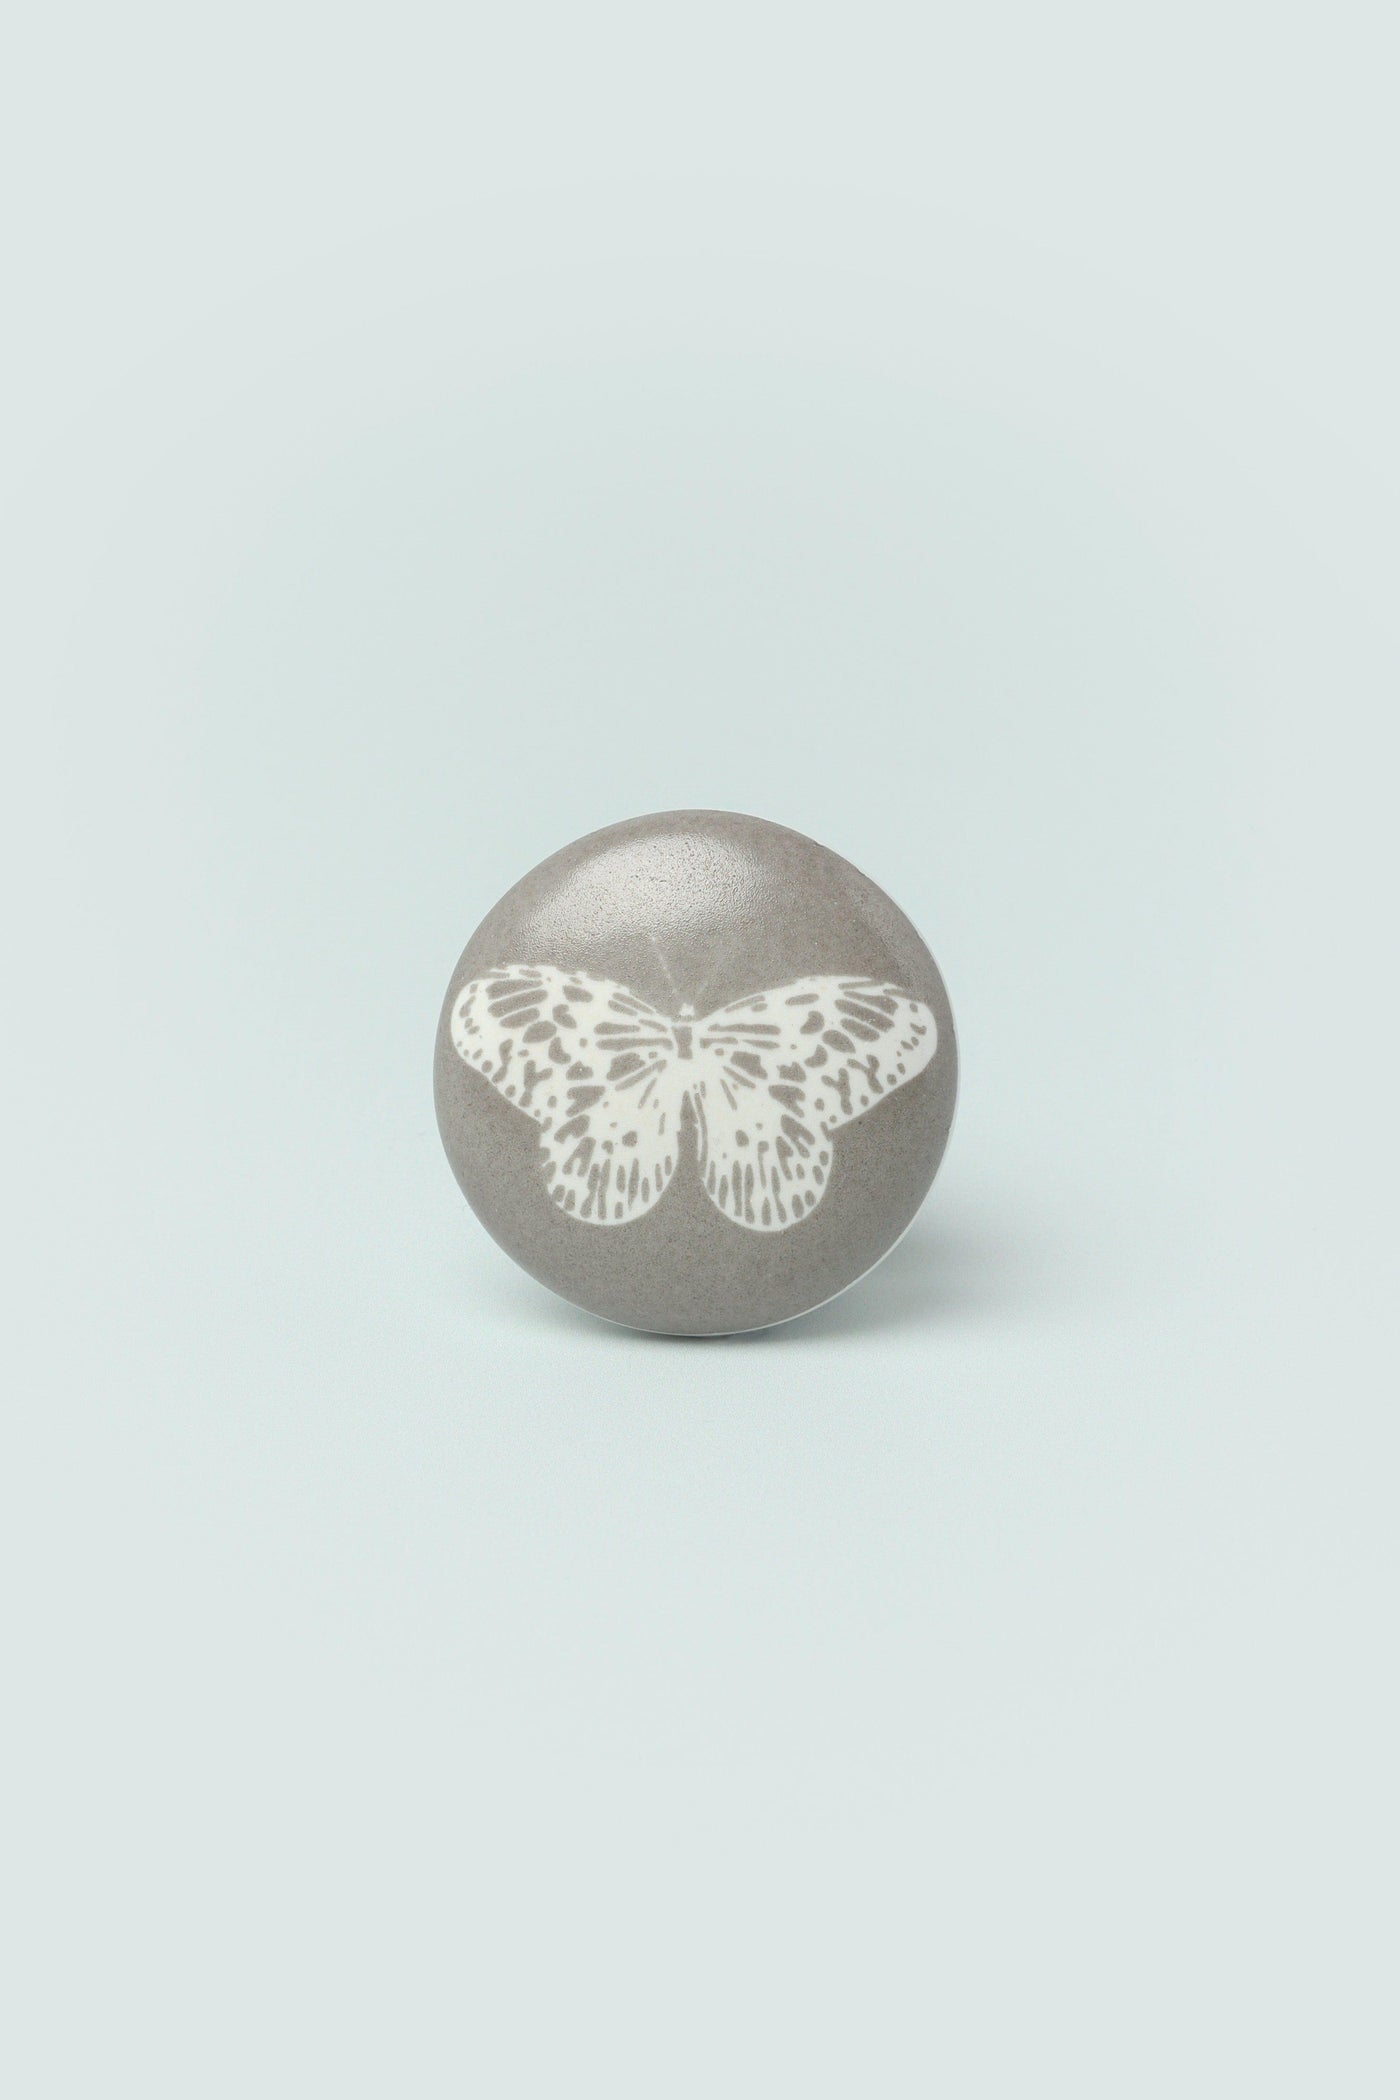 Gdecorstore Door Knobs & Handles White / Grey Butterfly Stamp Ceramic Door Knobs by G Decor